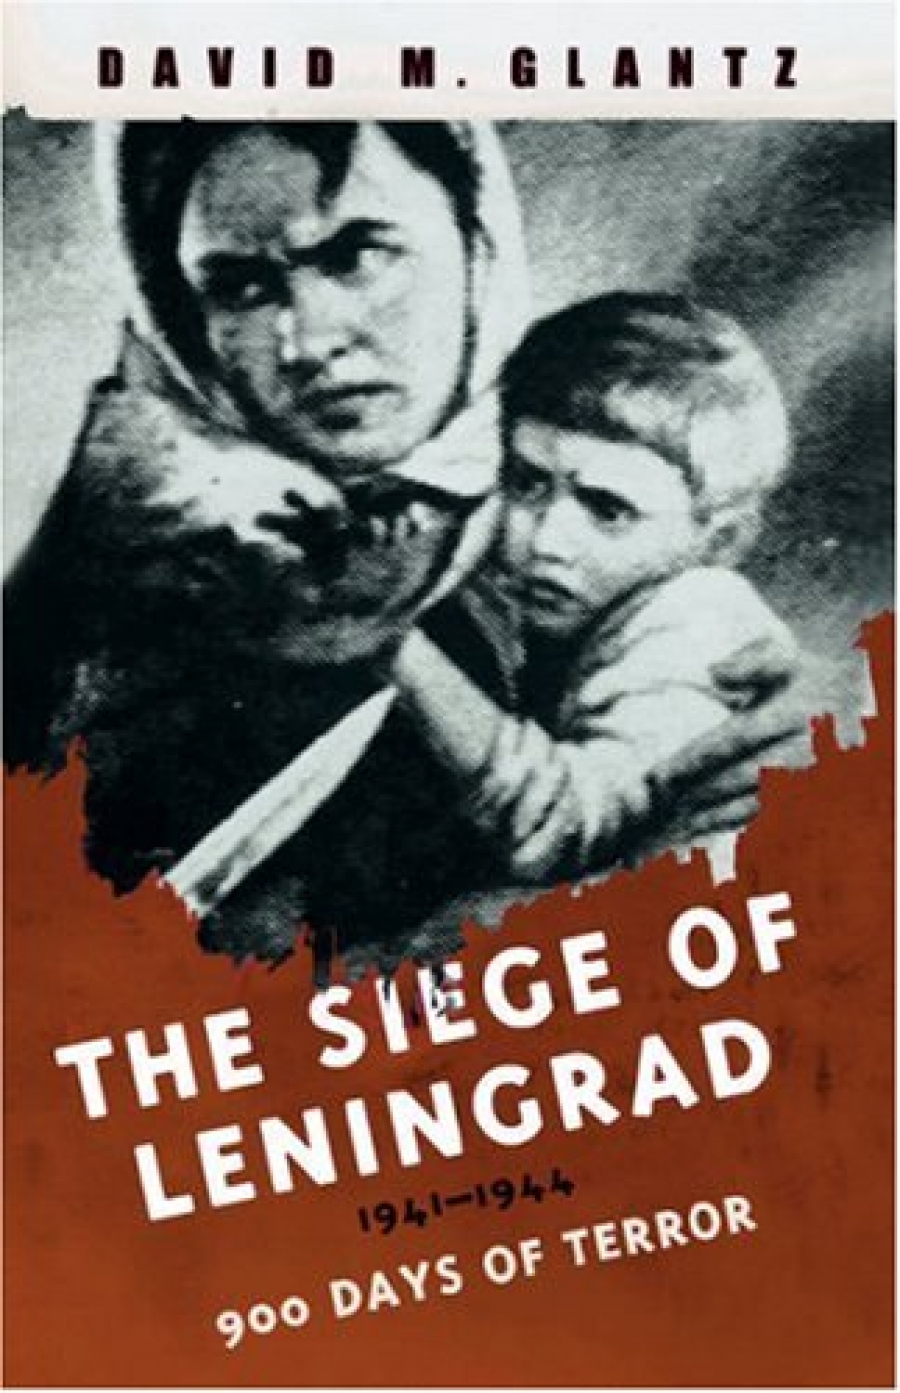 David, Glantz Siege of Leningrad 